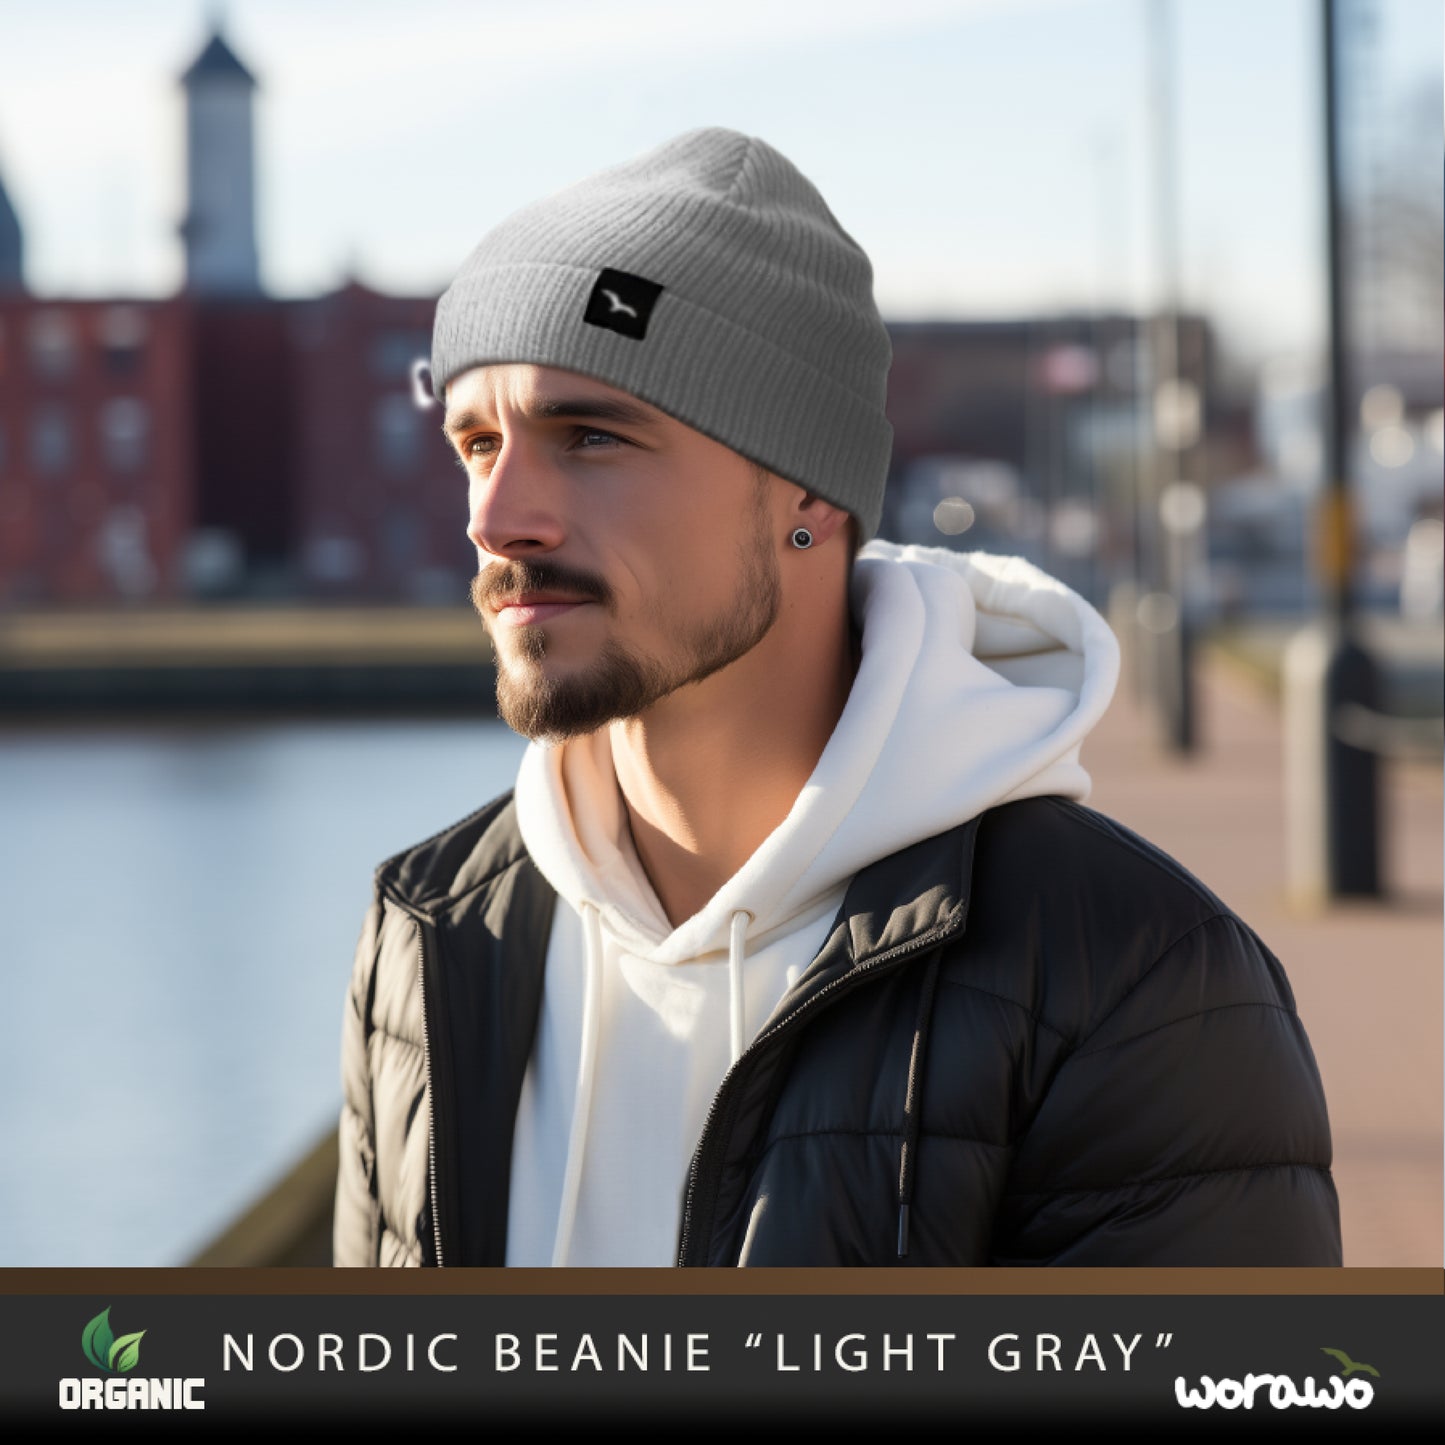 Nordic Beanie "light gray"